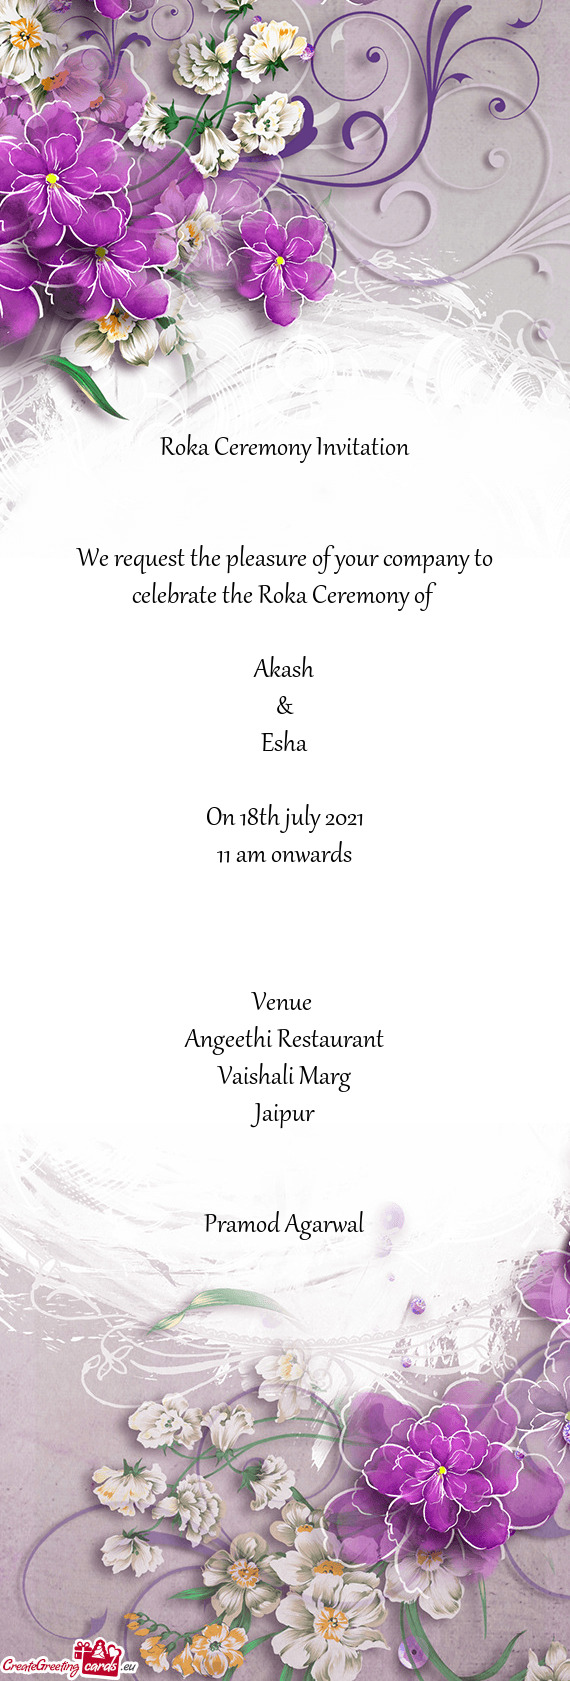 Roka Ceremony Invitation
 
 
 We request the pleasure of your company to celebrate the Roka Ceremony